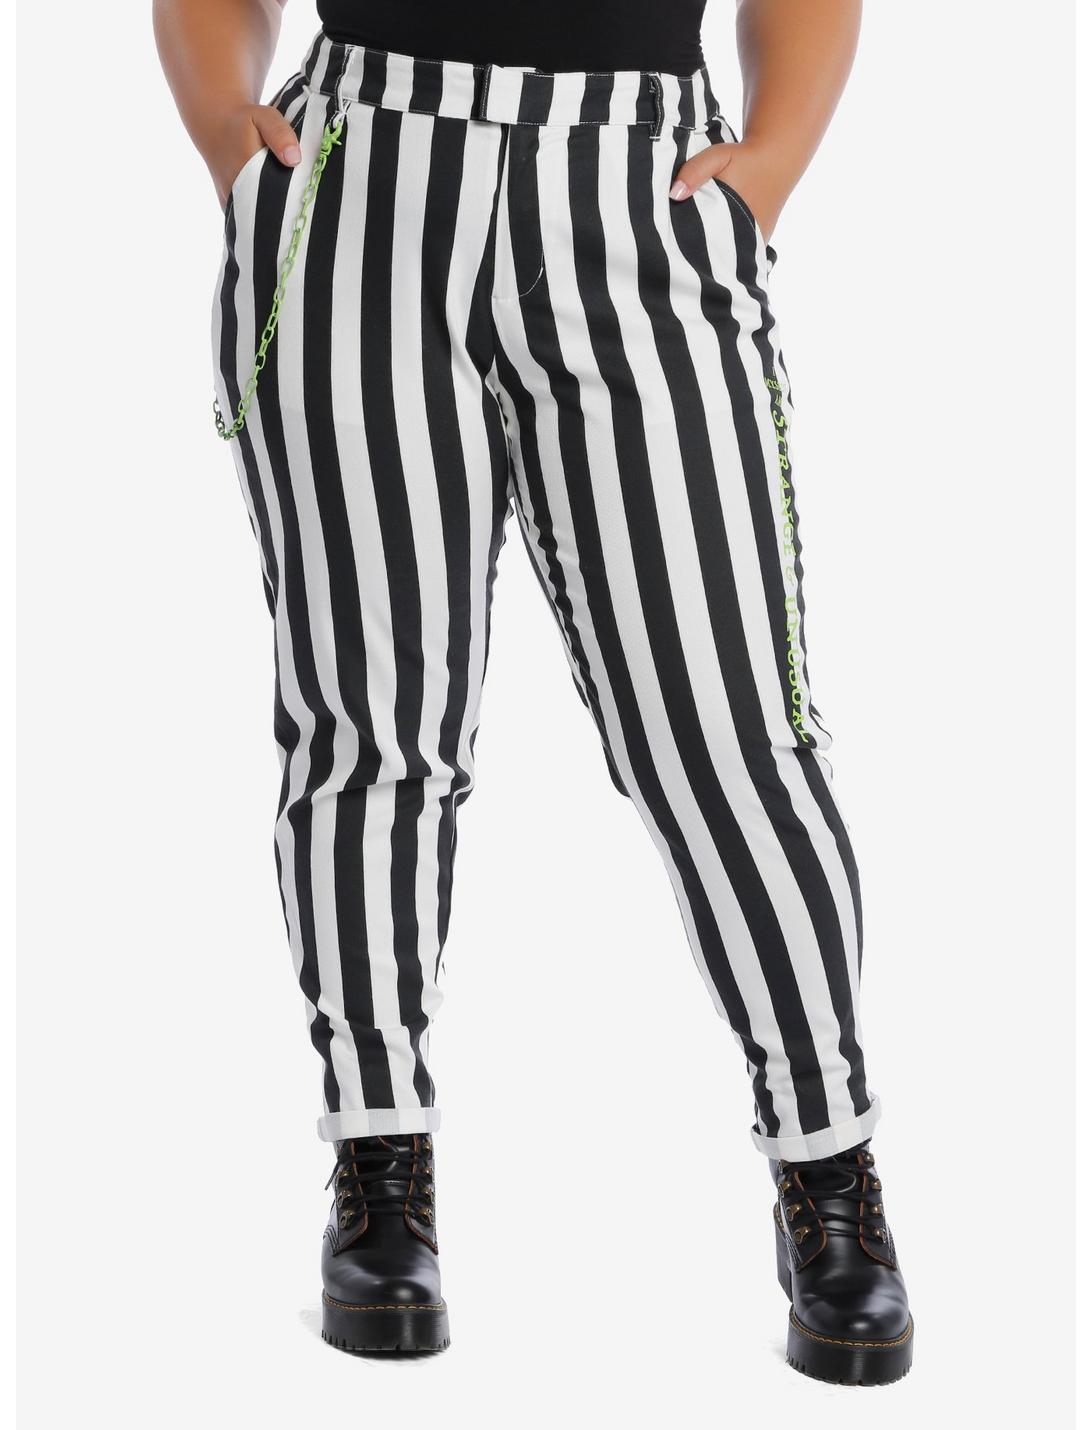 Beetlejuice Black & White Stripe Chain Pants Plus Size | Hot Topic